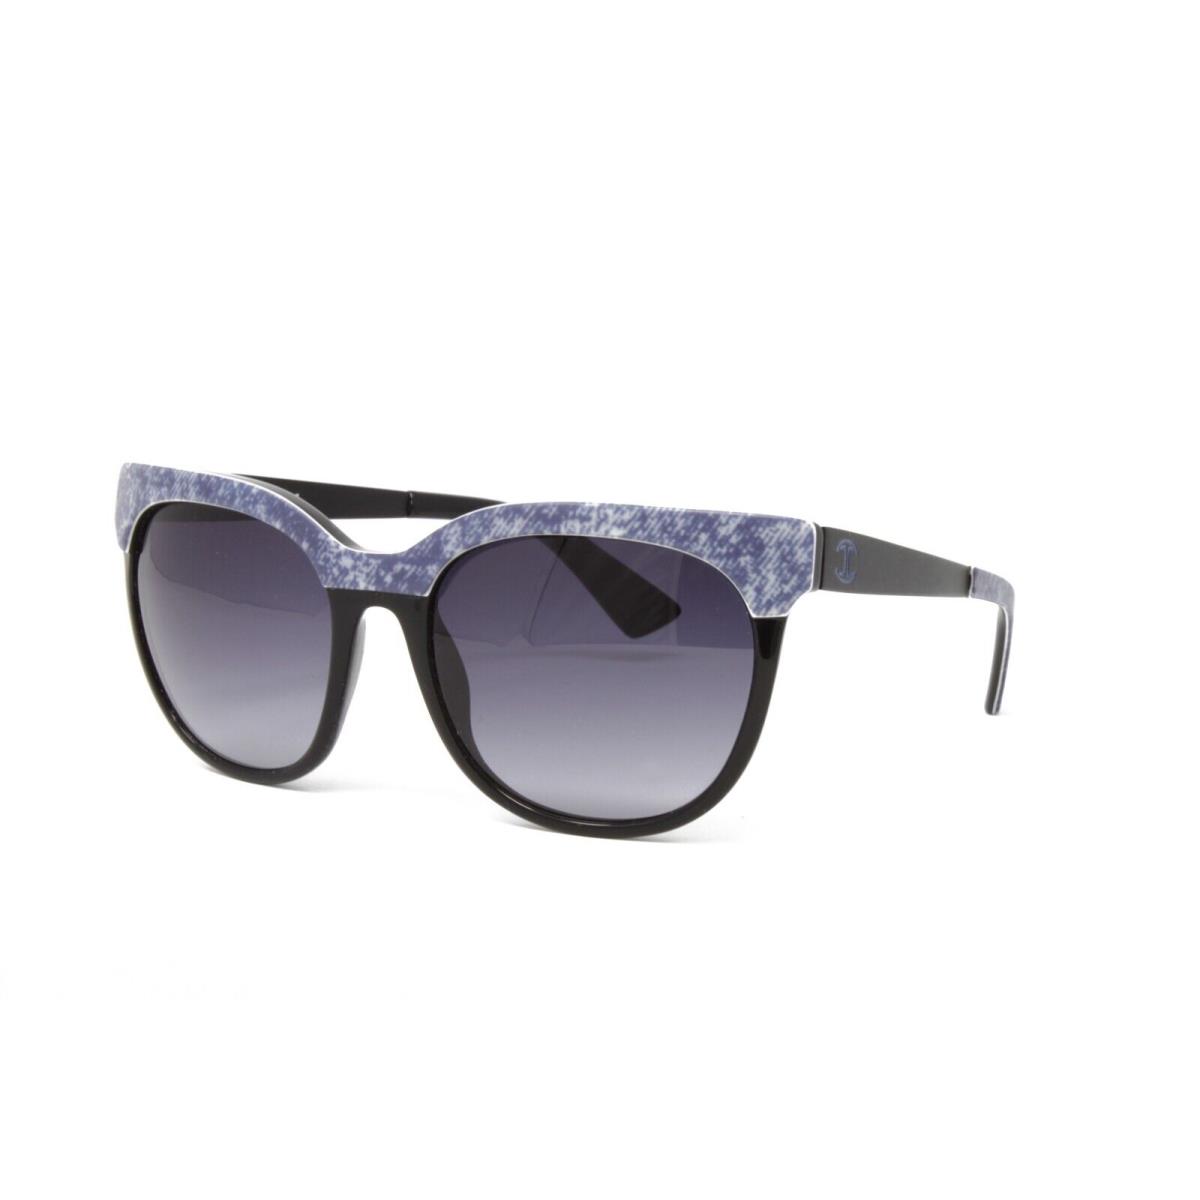 Just Cavalli Women`s Sunglasses JC501S 05W Black Denim 54mm Grey Gradient Lens